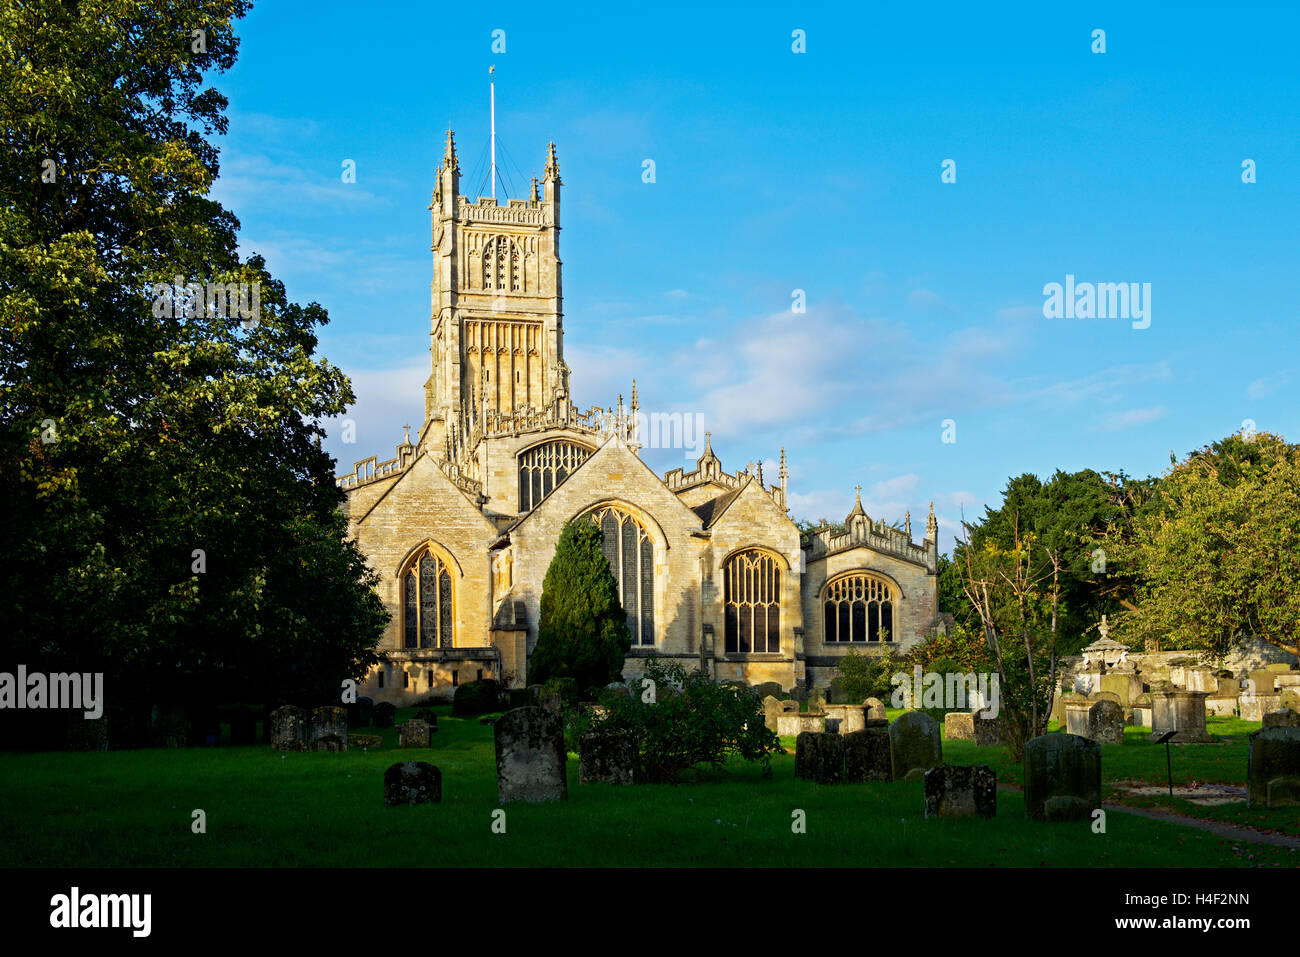 The church of St John the Baptist, Cirencester, Gloucester, England UK Stock Photo